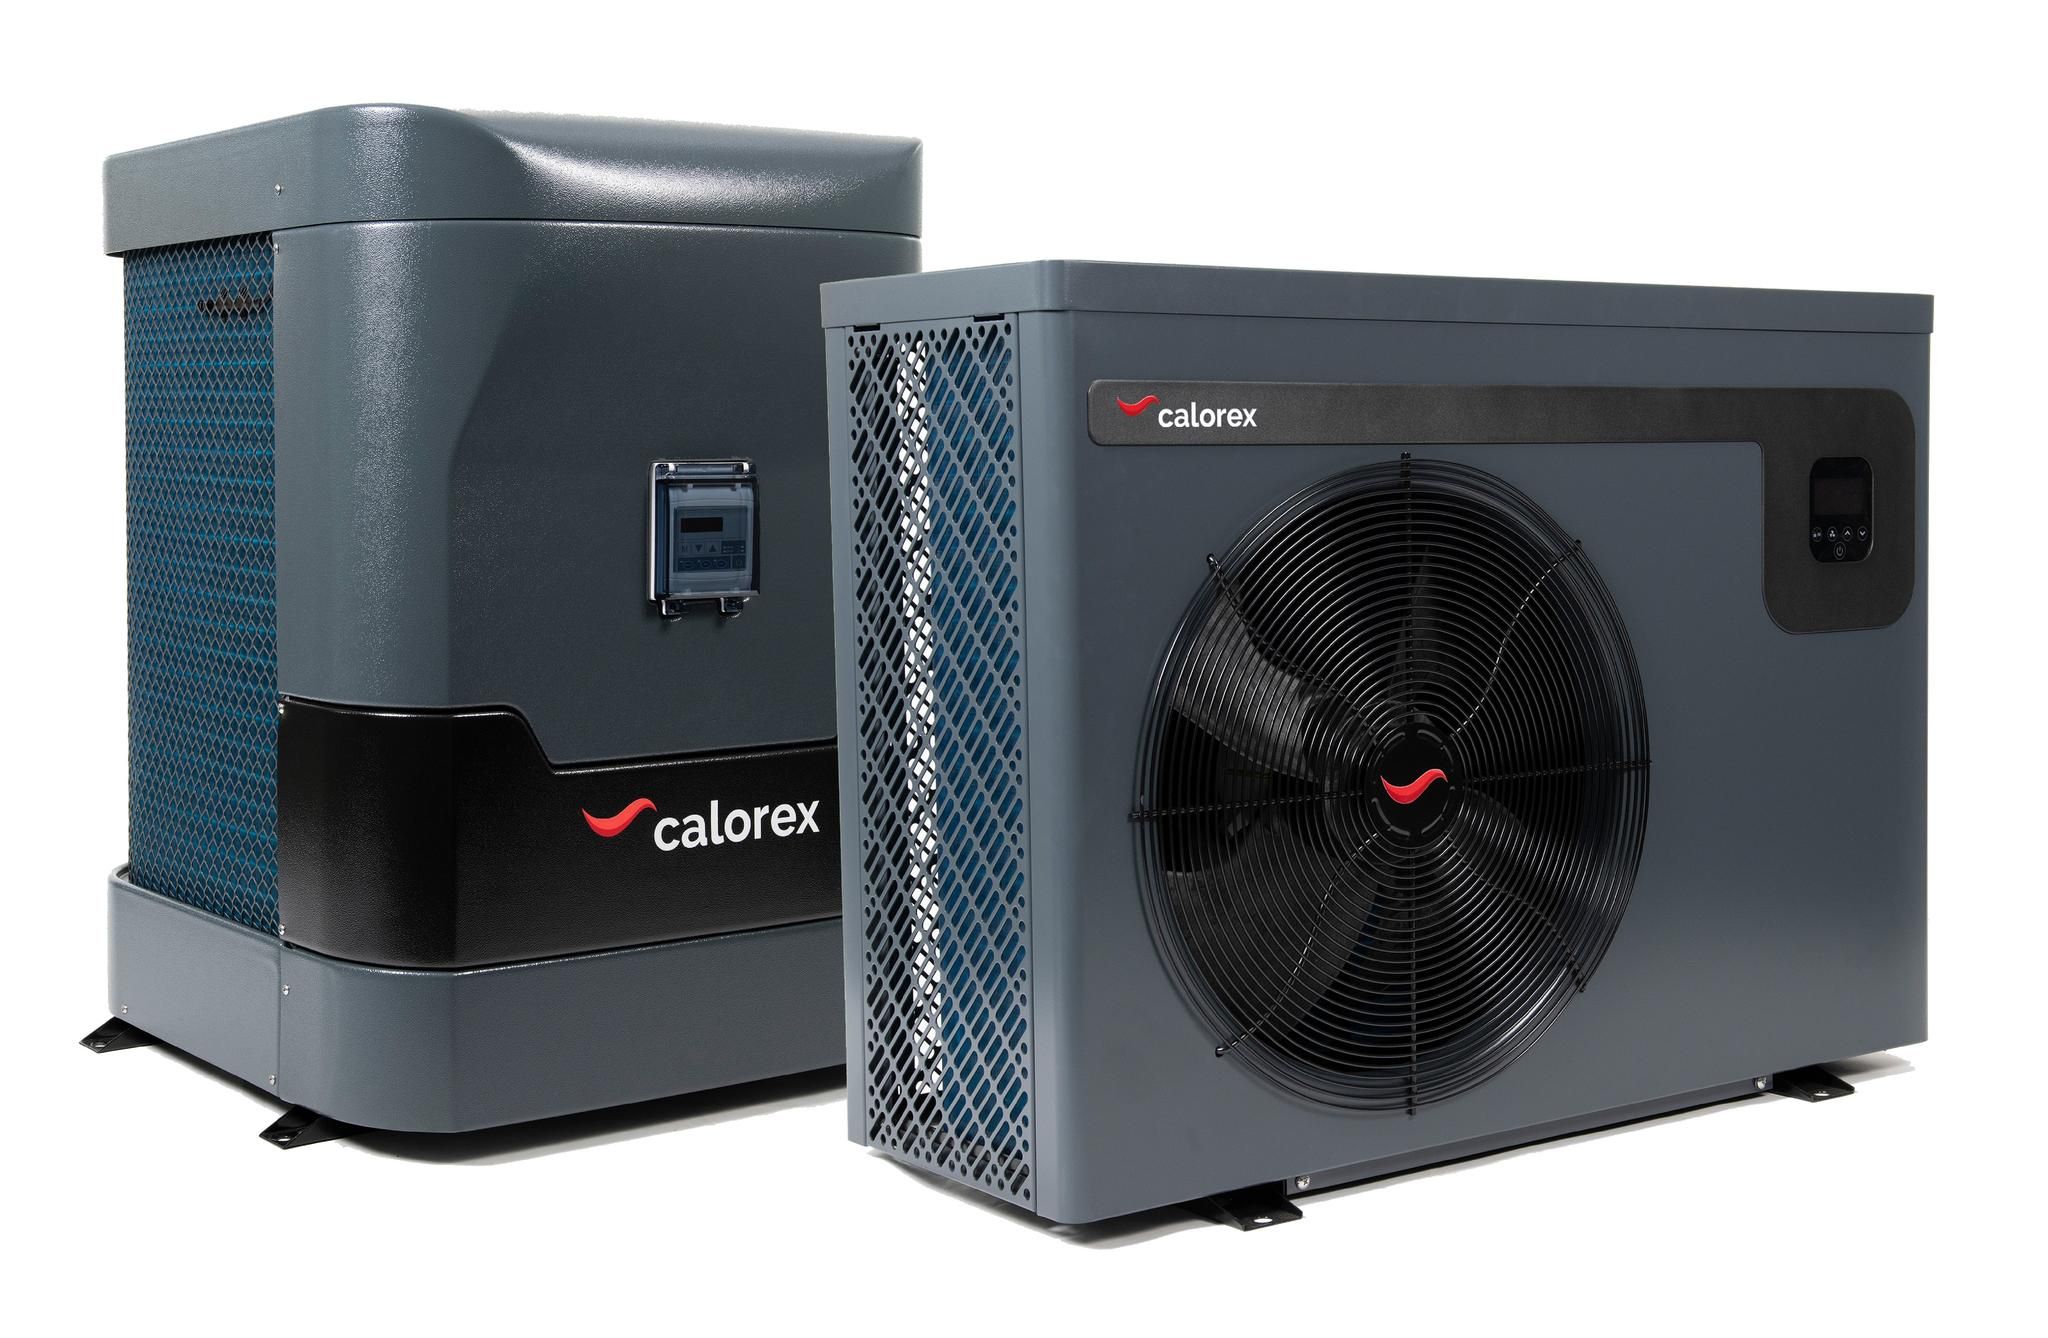 Calorex launches new range of inverter heat pumps